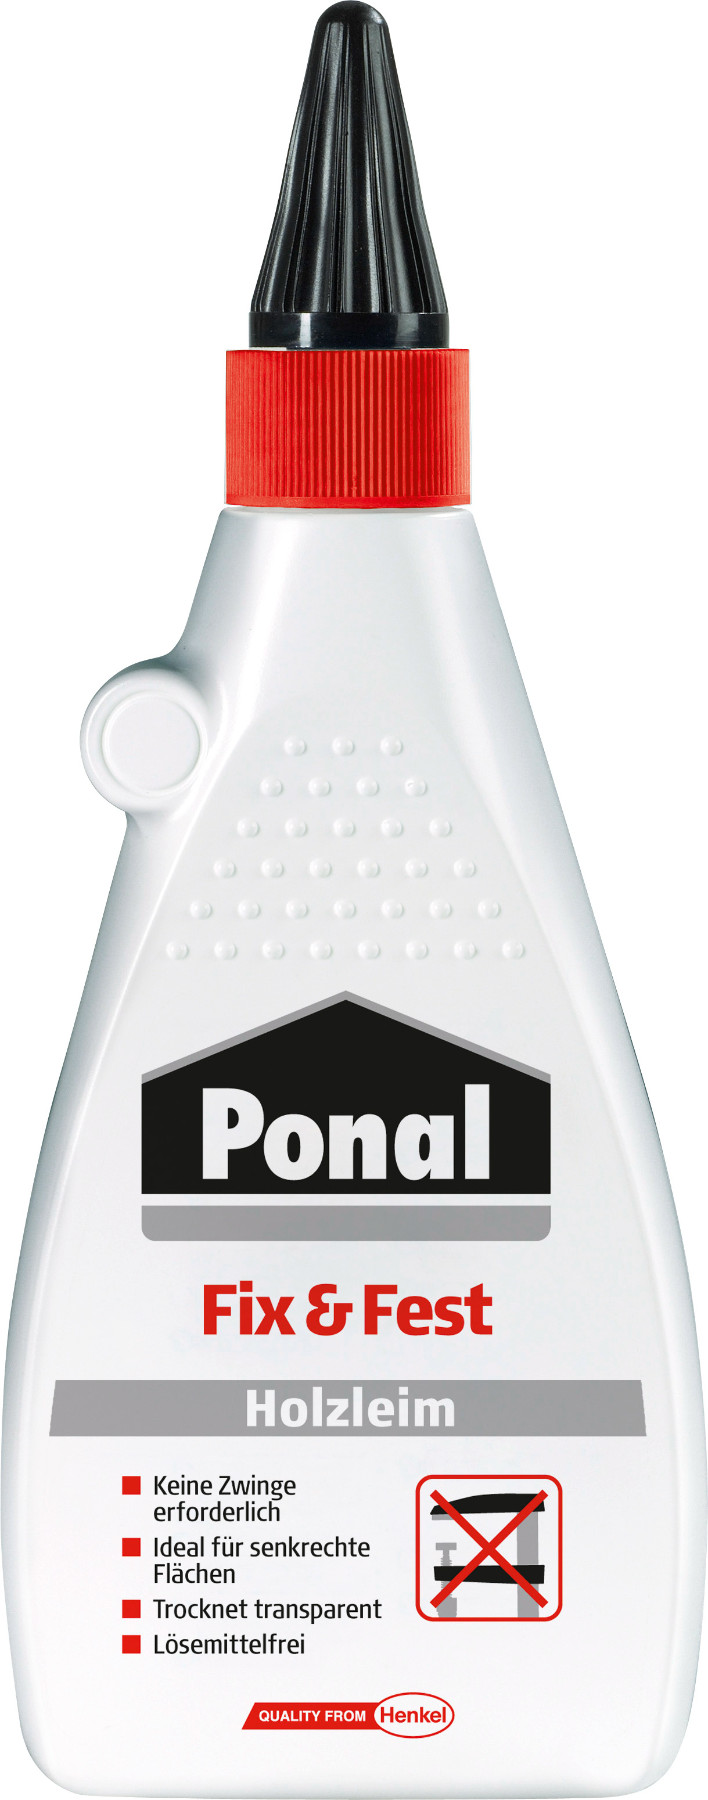 Ponal Fix & Fest 500g Flasche  